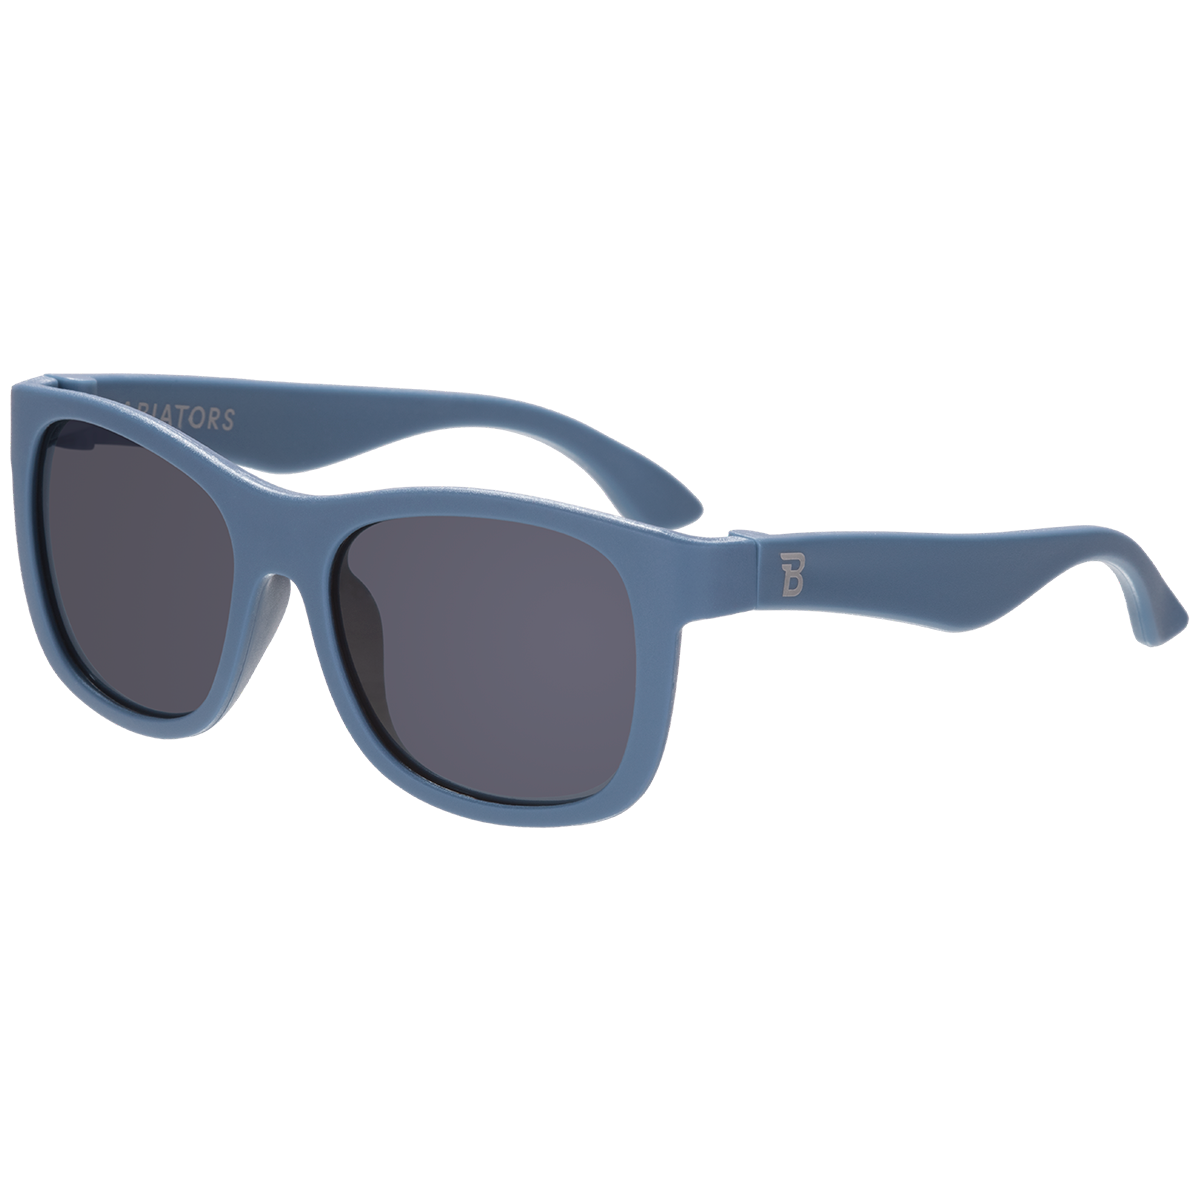 Babiators - Navigator Sunglasses in Pacific Blue: Ages 0-2